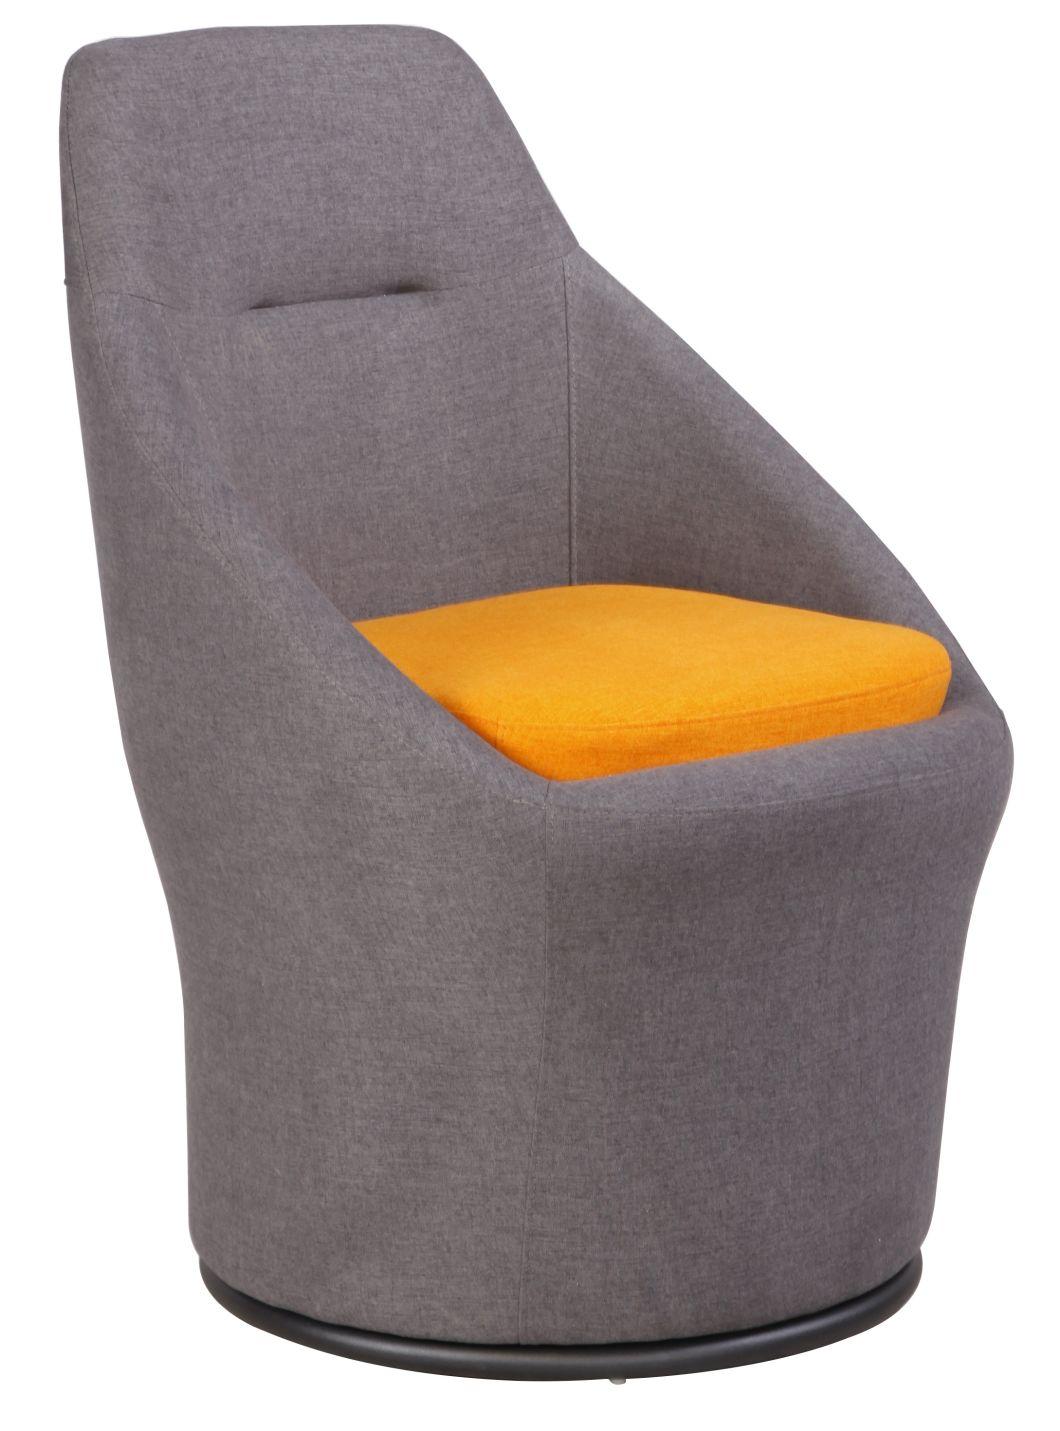 Modern Furniture Hotel Office Desinged Leisure Chair